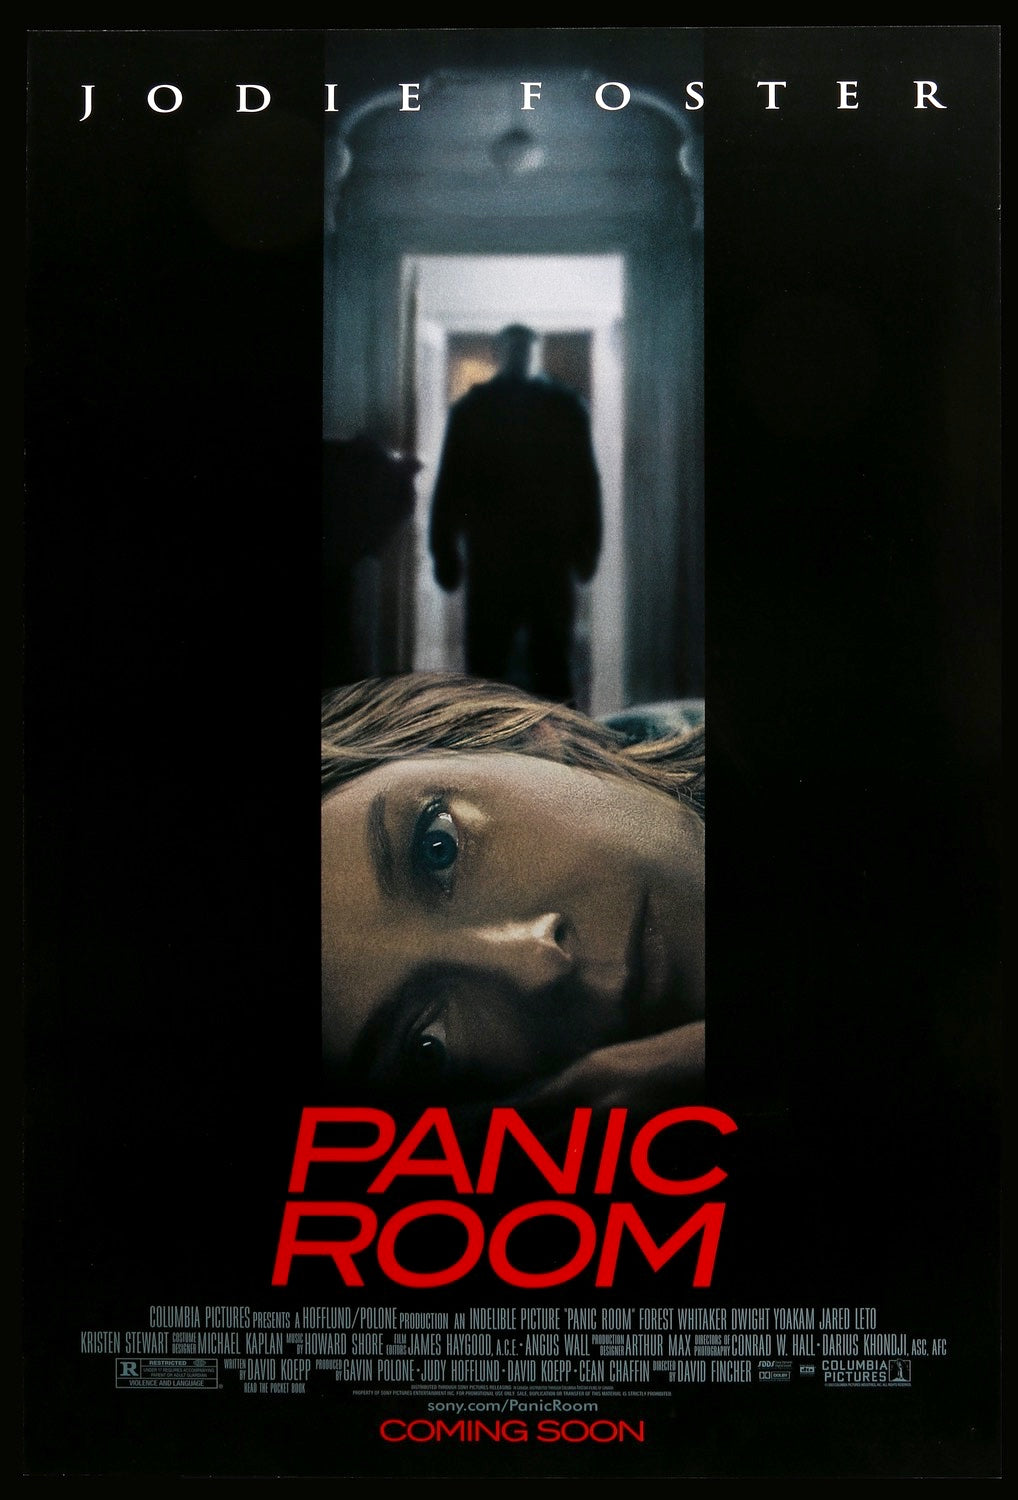 Panic Room (2002) original movie poster for sale at Original Film Art